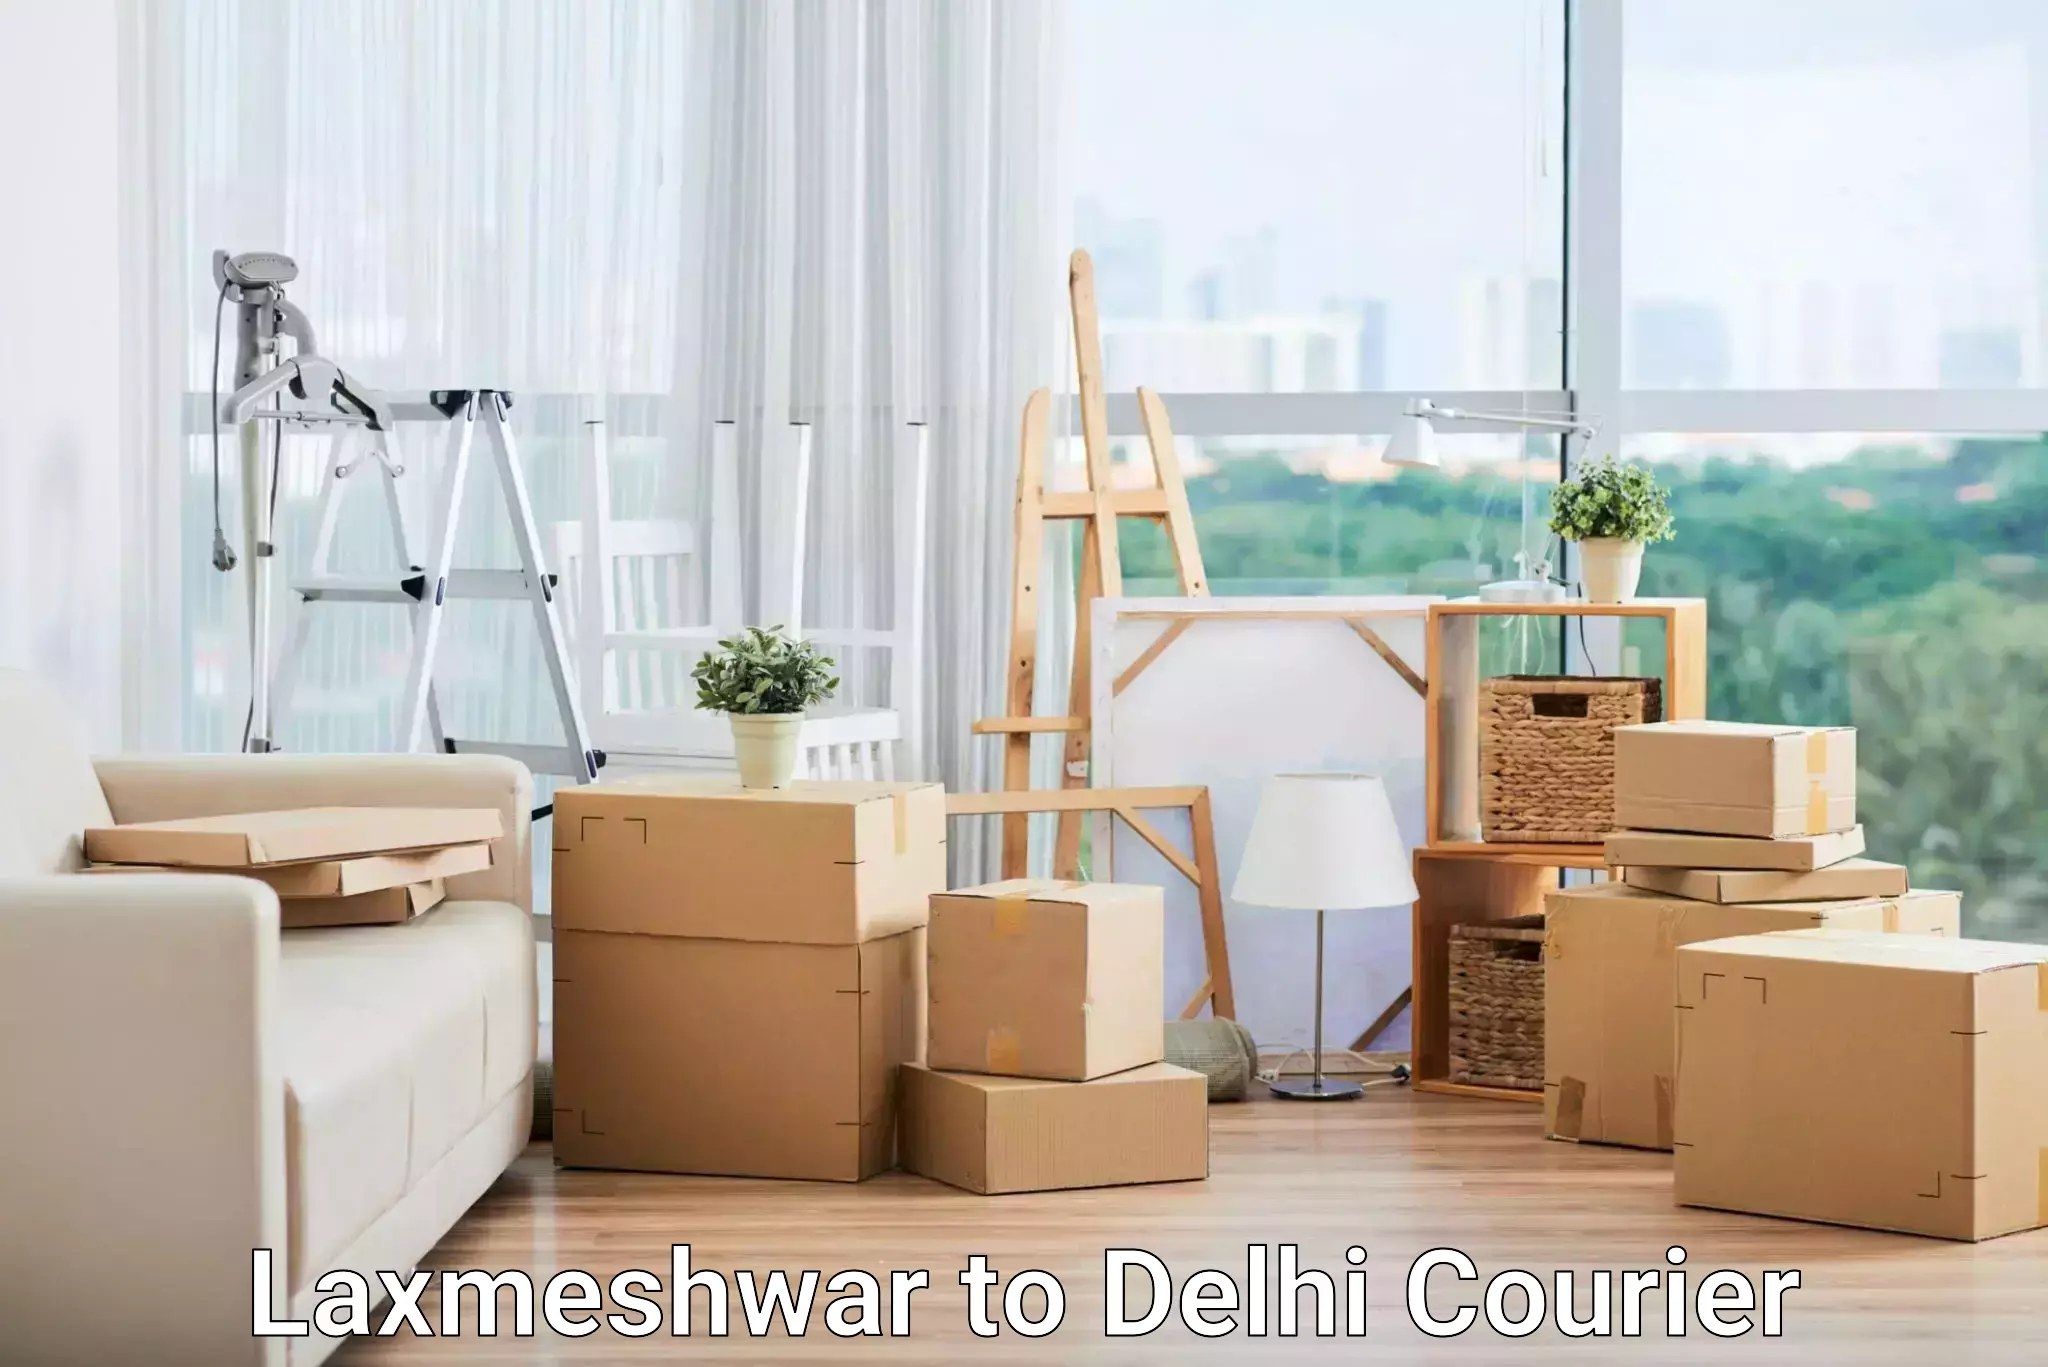 Affordable parcel rates in Laxmeshwar to University of Delhi